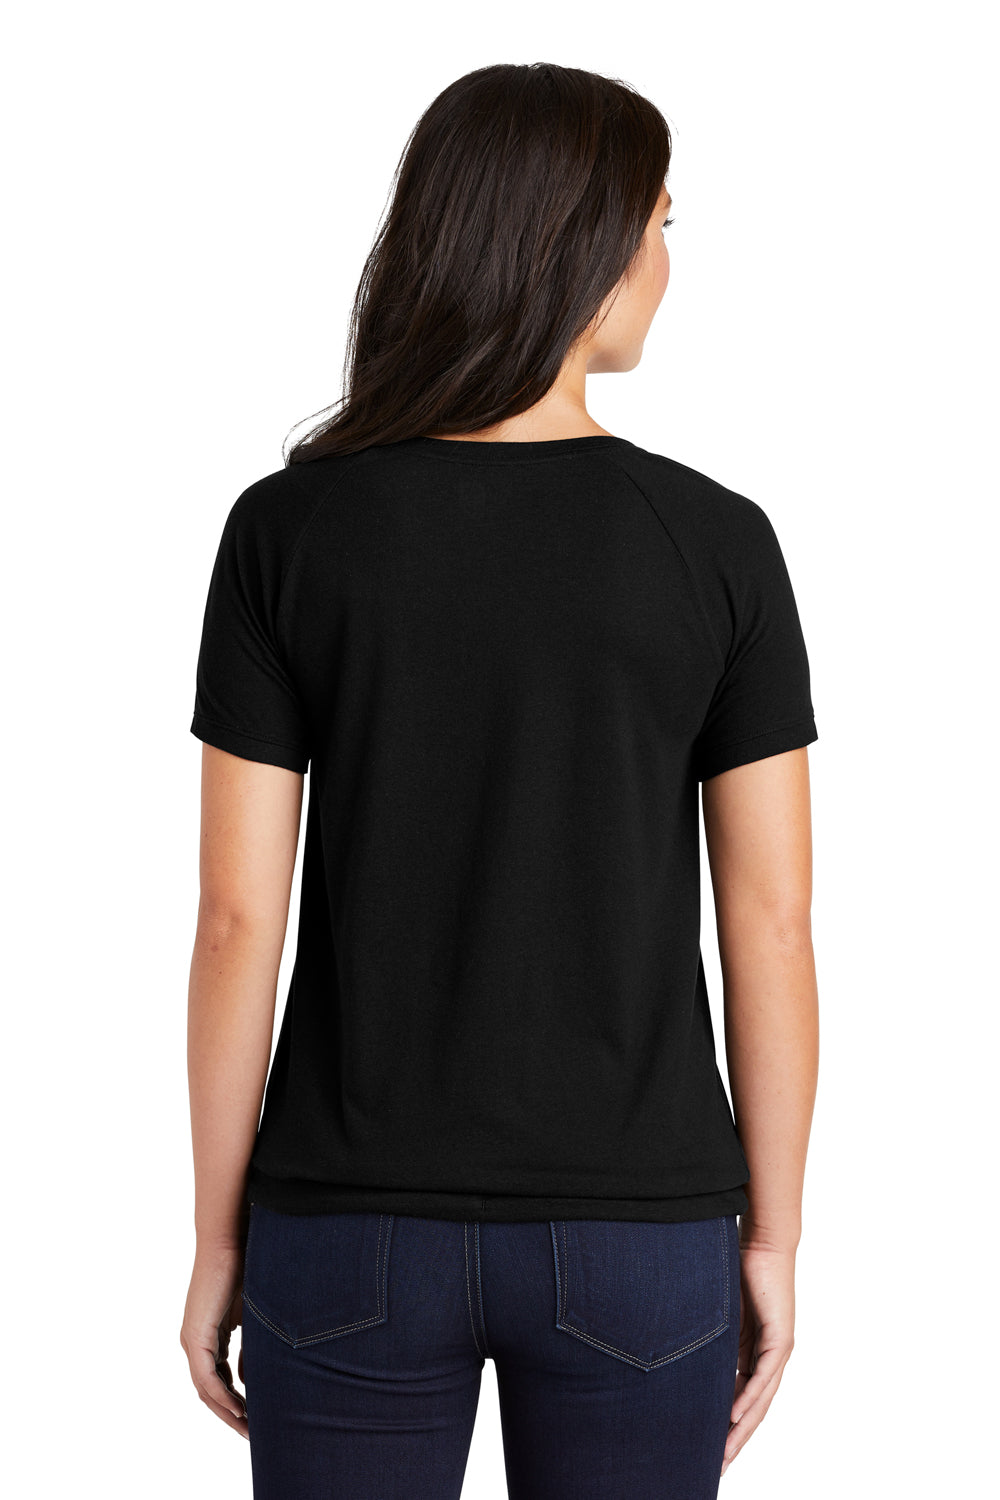 New Era LNEA133 Womens Performance Cinch Moisture Wicking Short Sleeve Wide Neck T-Shirt Black Back